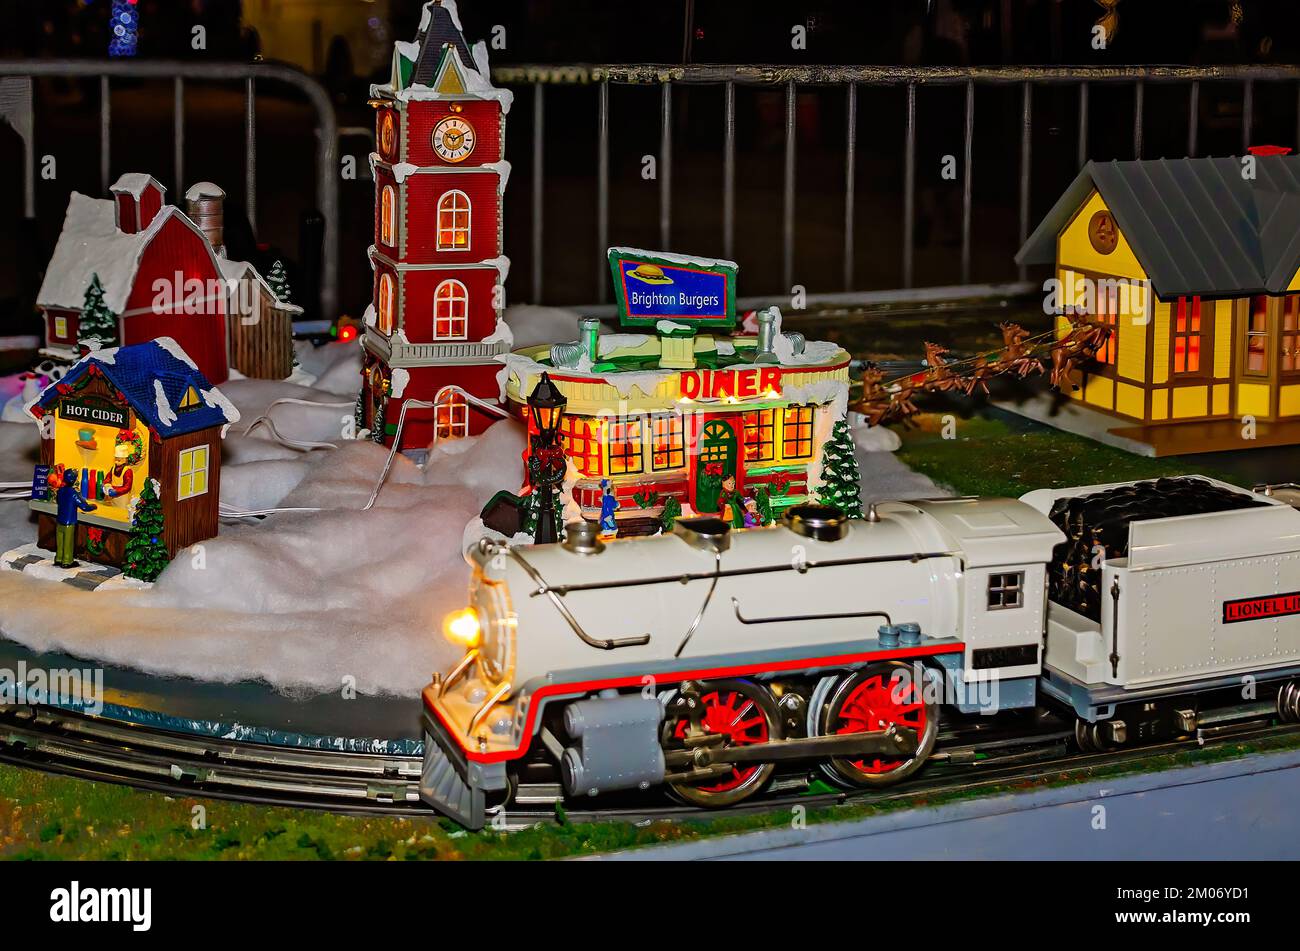 A Lionel train hauls coal past a Christmas village, Nov. 18, 2022, in Mobile, Alabama. Stock Photo